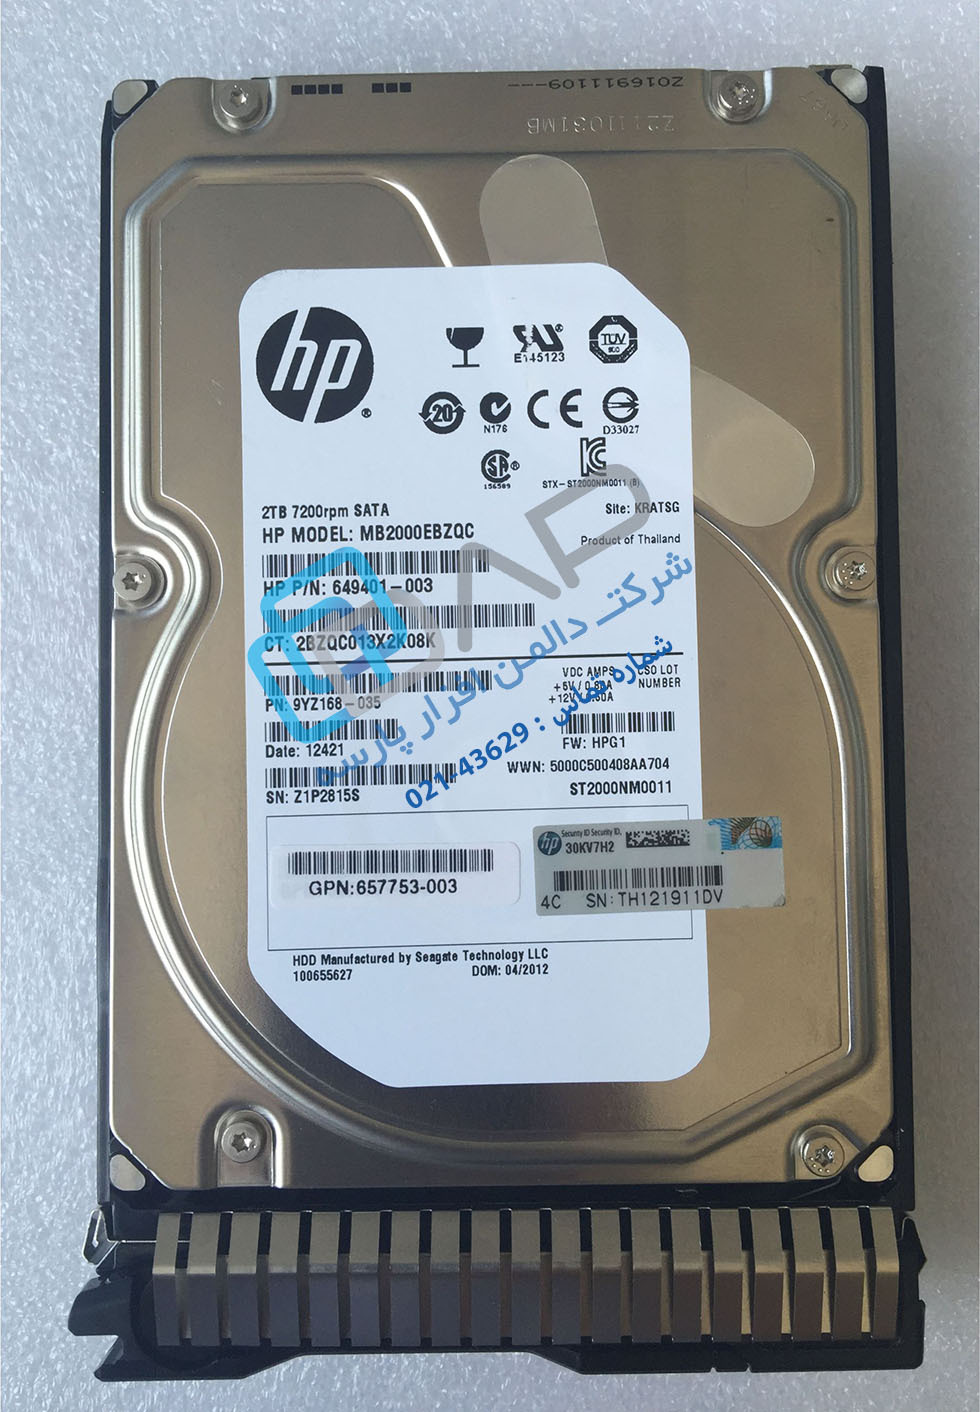  HP 2TB 3G SATA 7.2K rpm LFF (3.5-inch) Quick-release Midline Hard Drive (649401-003) 